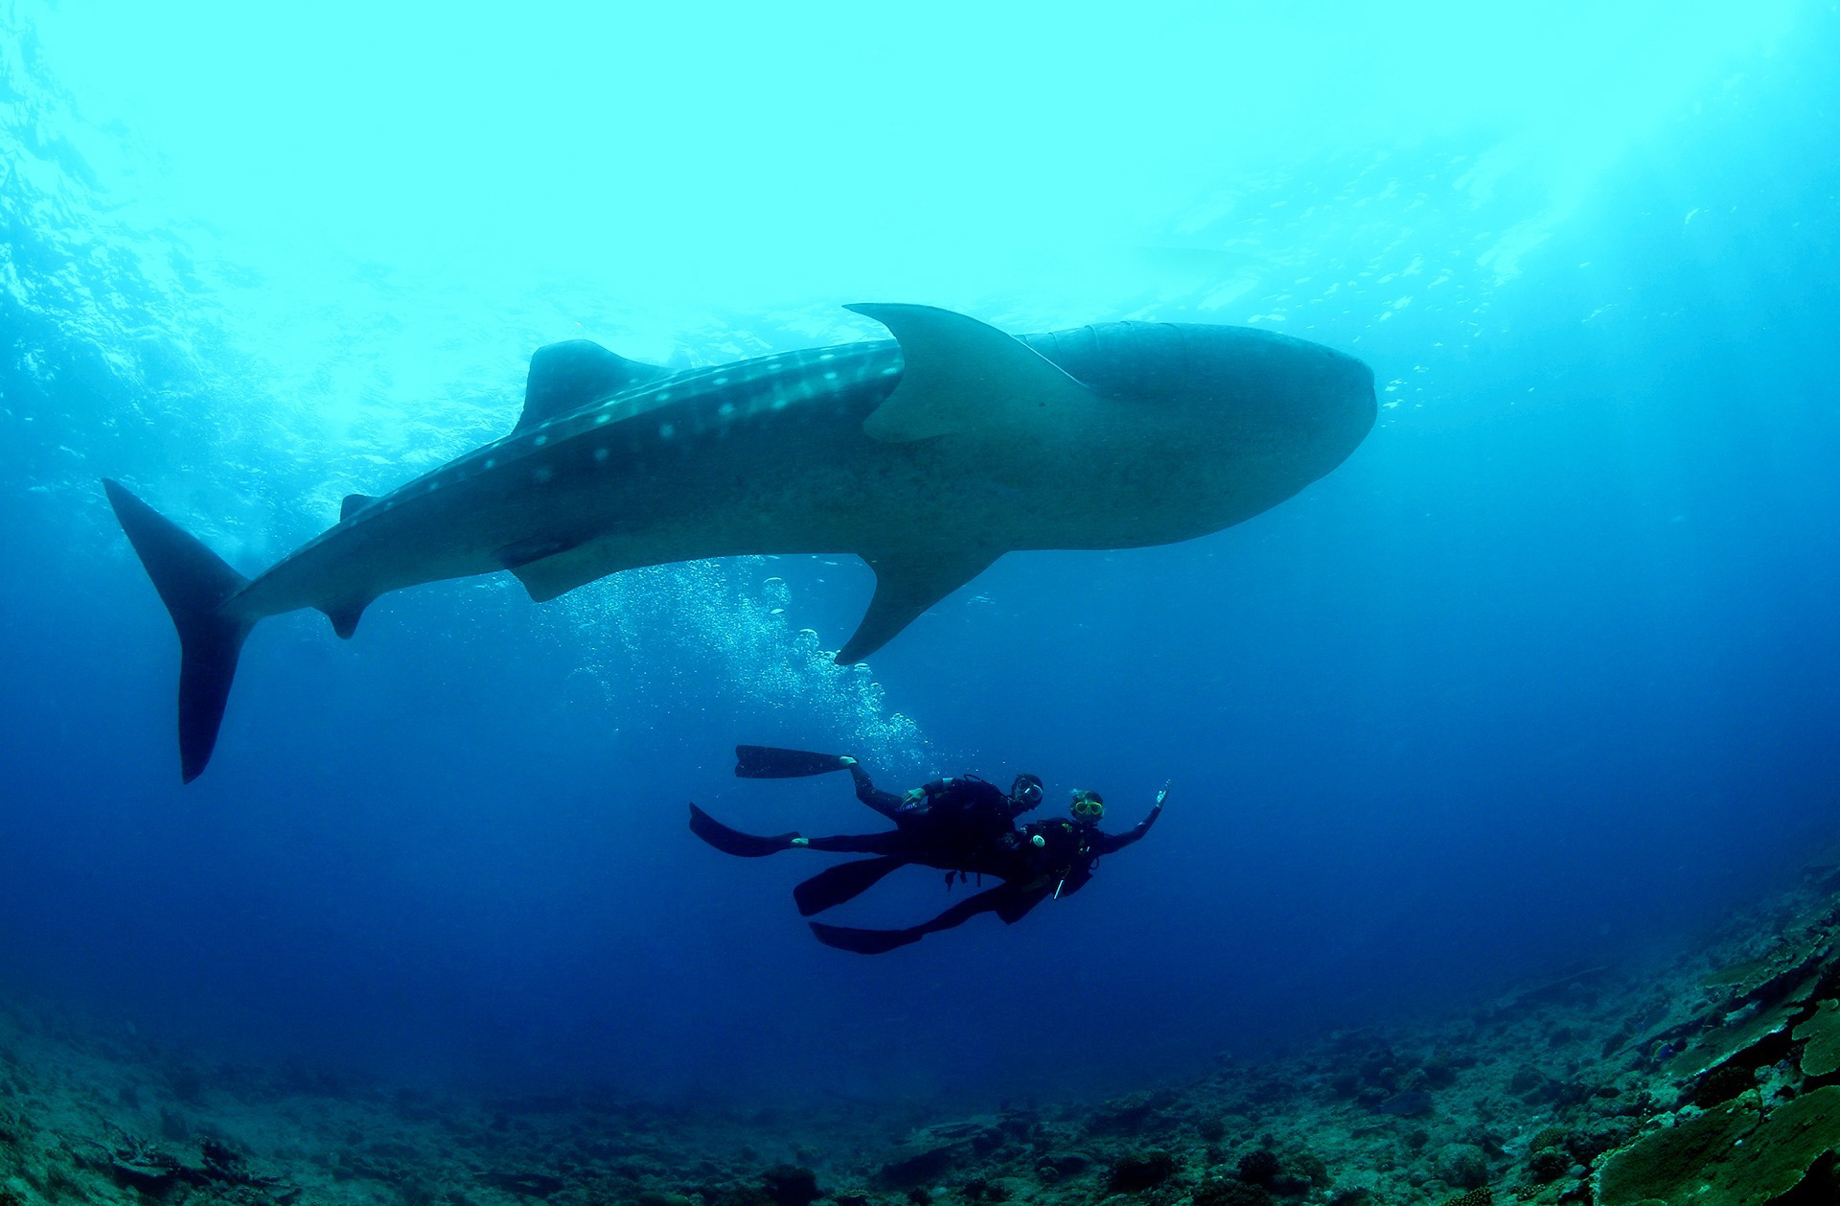 Baglioni Resort Maldives – Maagau Island, Rinbudhoo, Maldives – Scuba Diving Underwater View